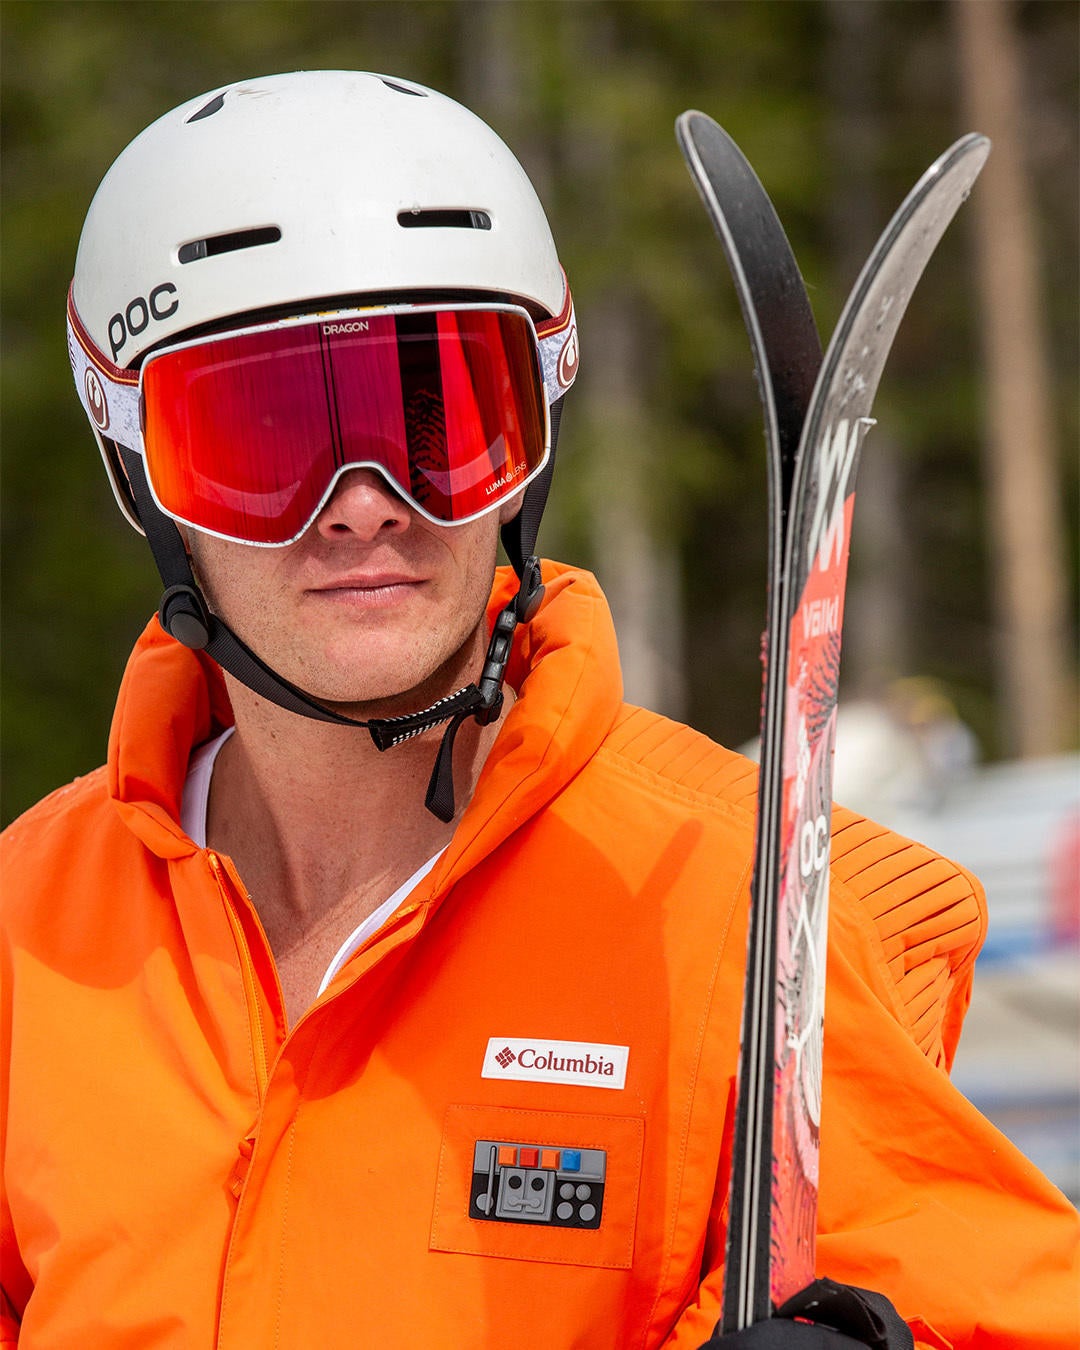 skywalker-pilot-ski-suit-and-goggles-on-alex-ferreira.jpg